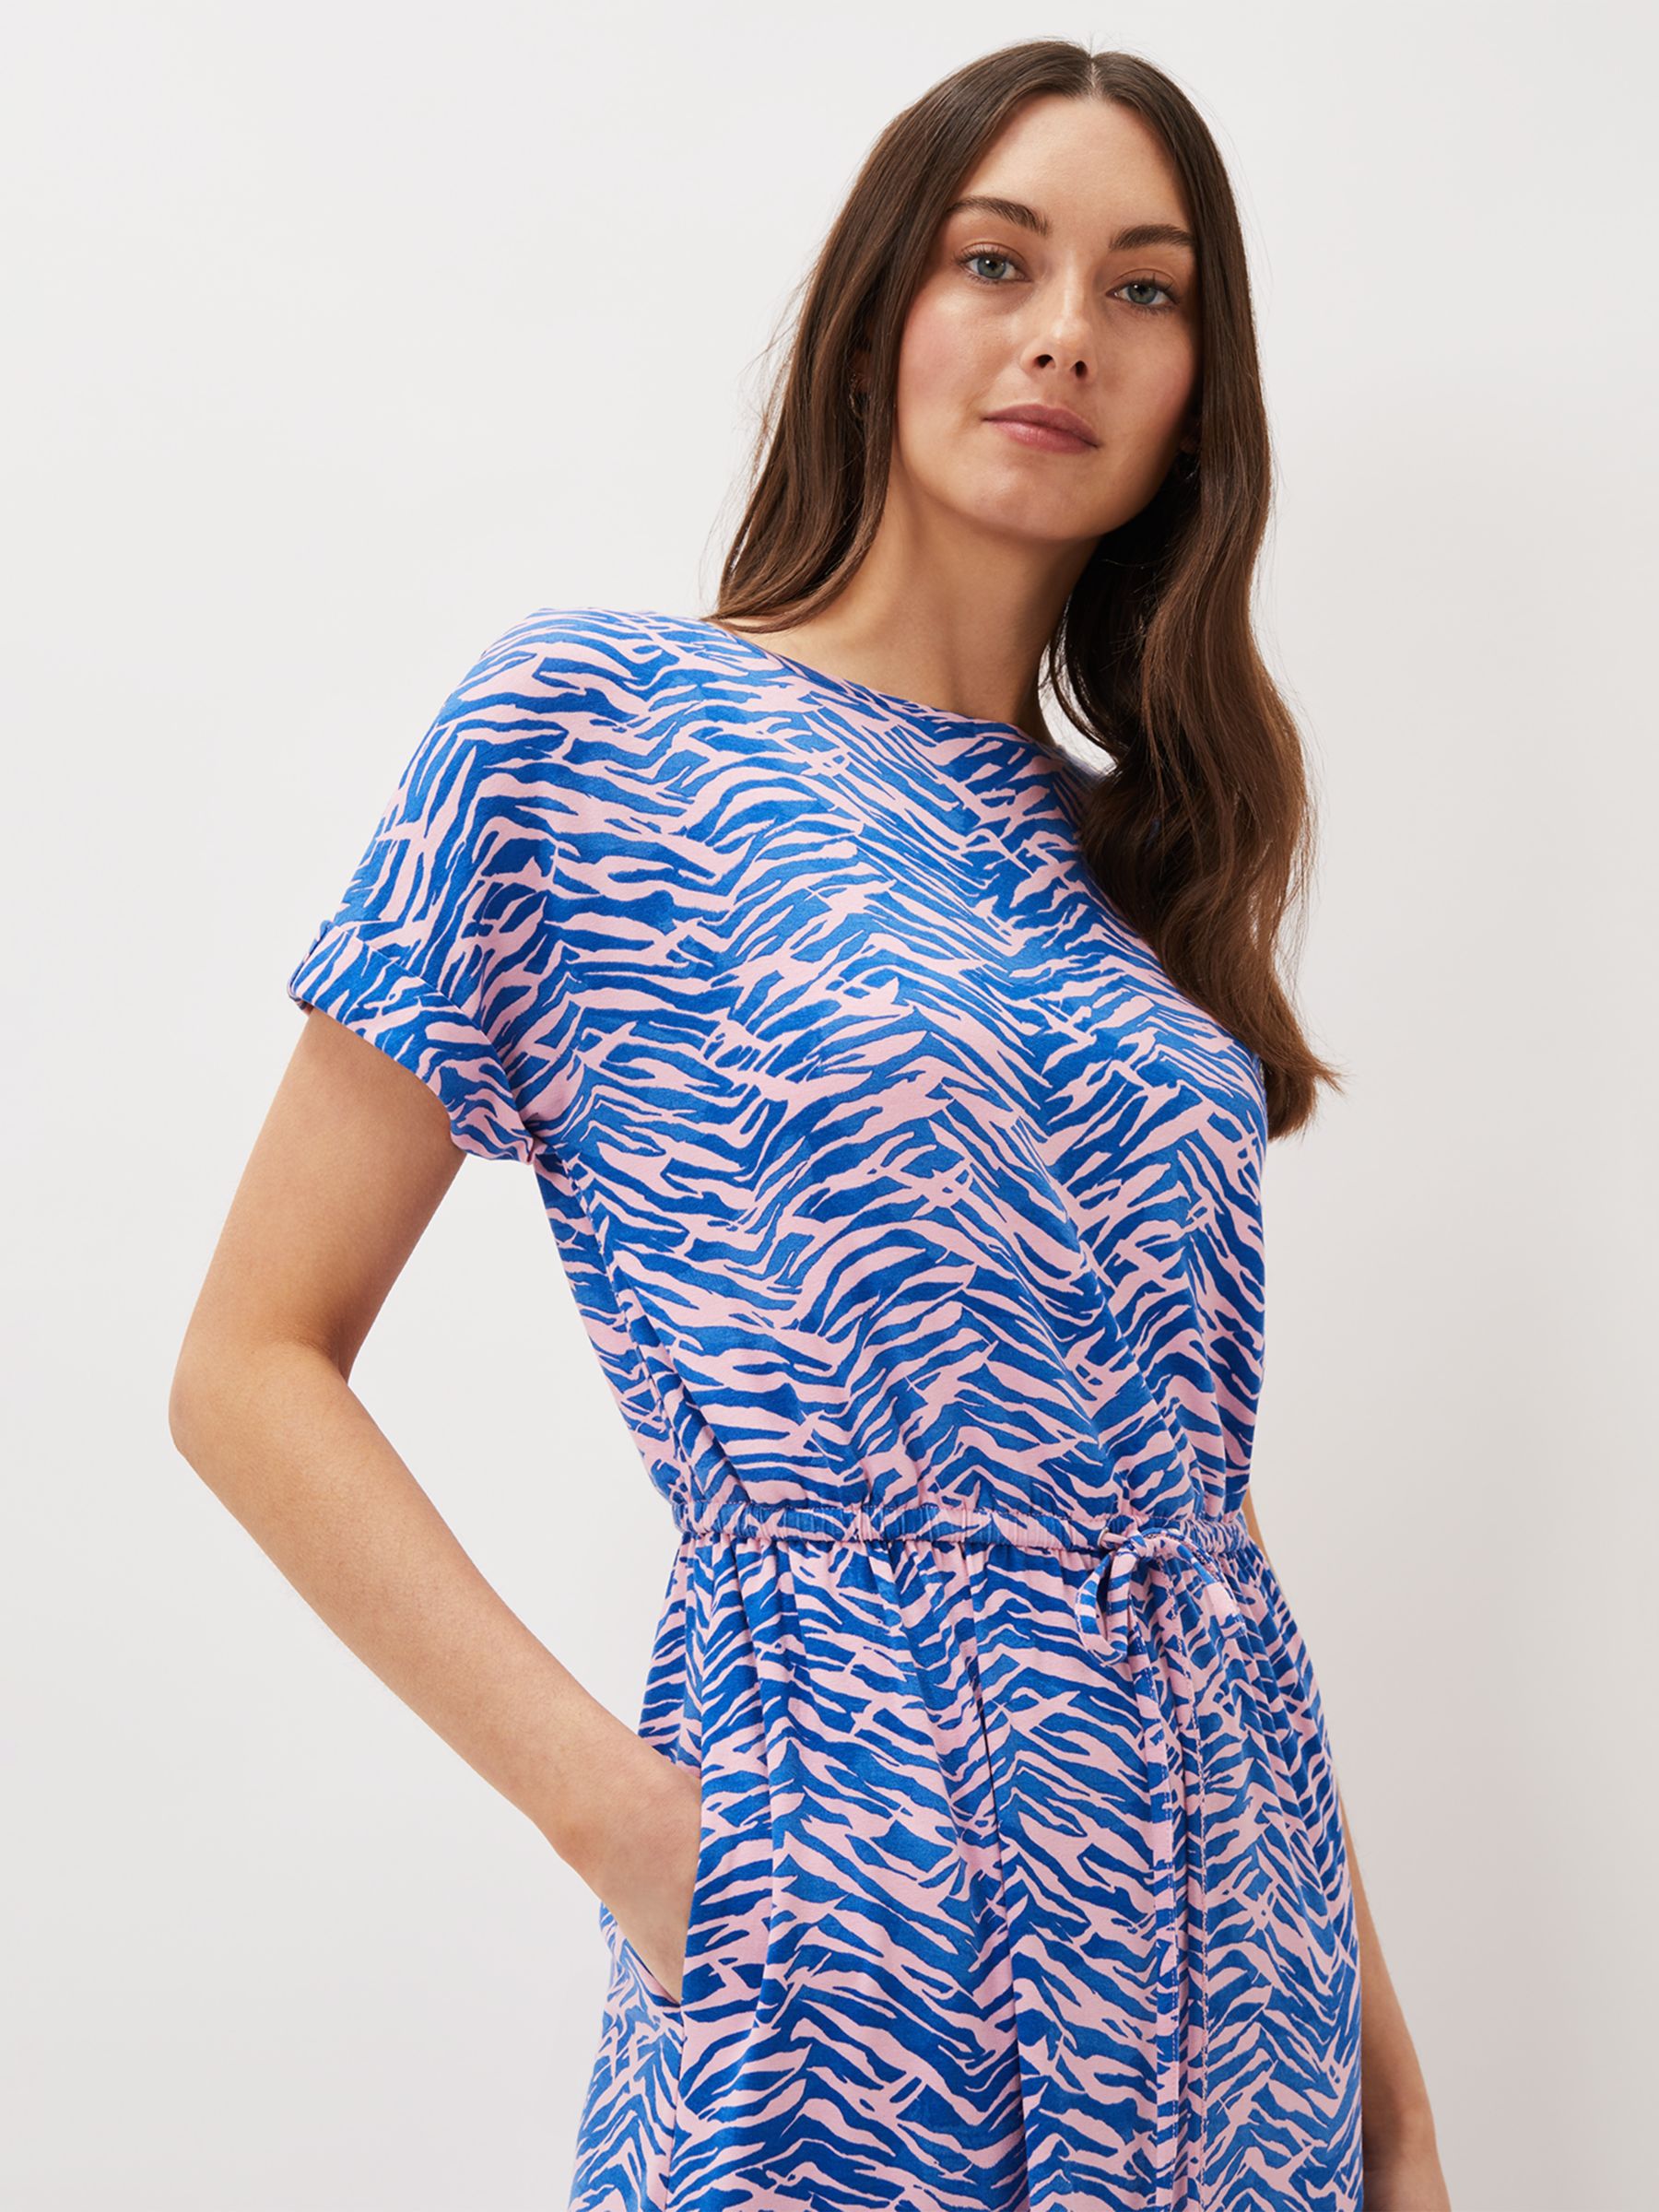 Buy Phase Eight Alina Zebra Dress, Pink/Blue Online at johnlewis.com